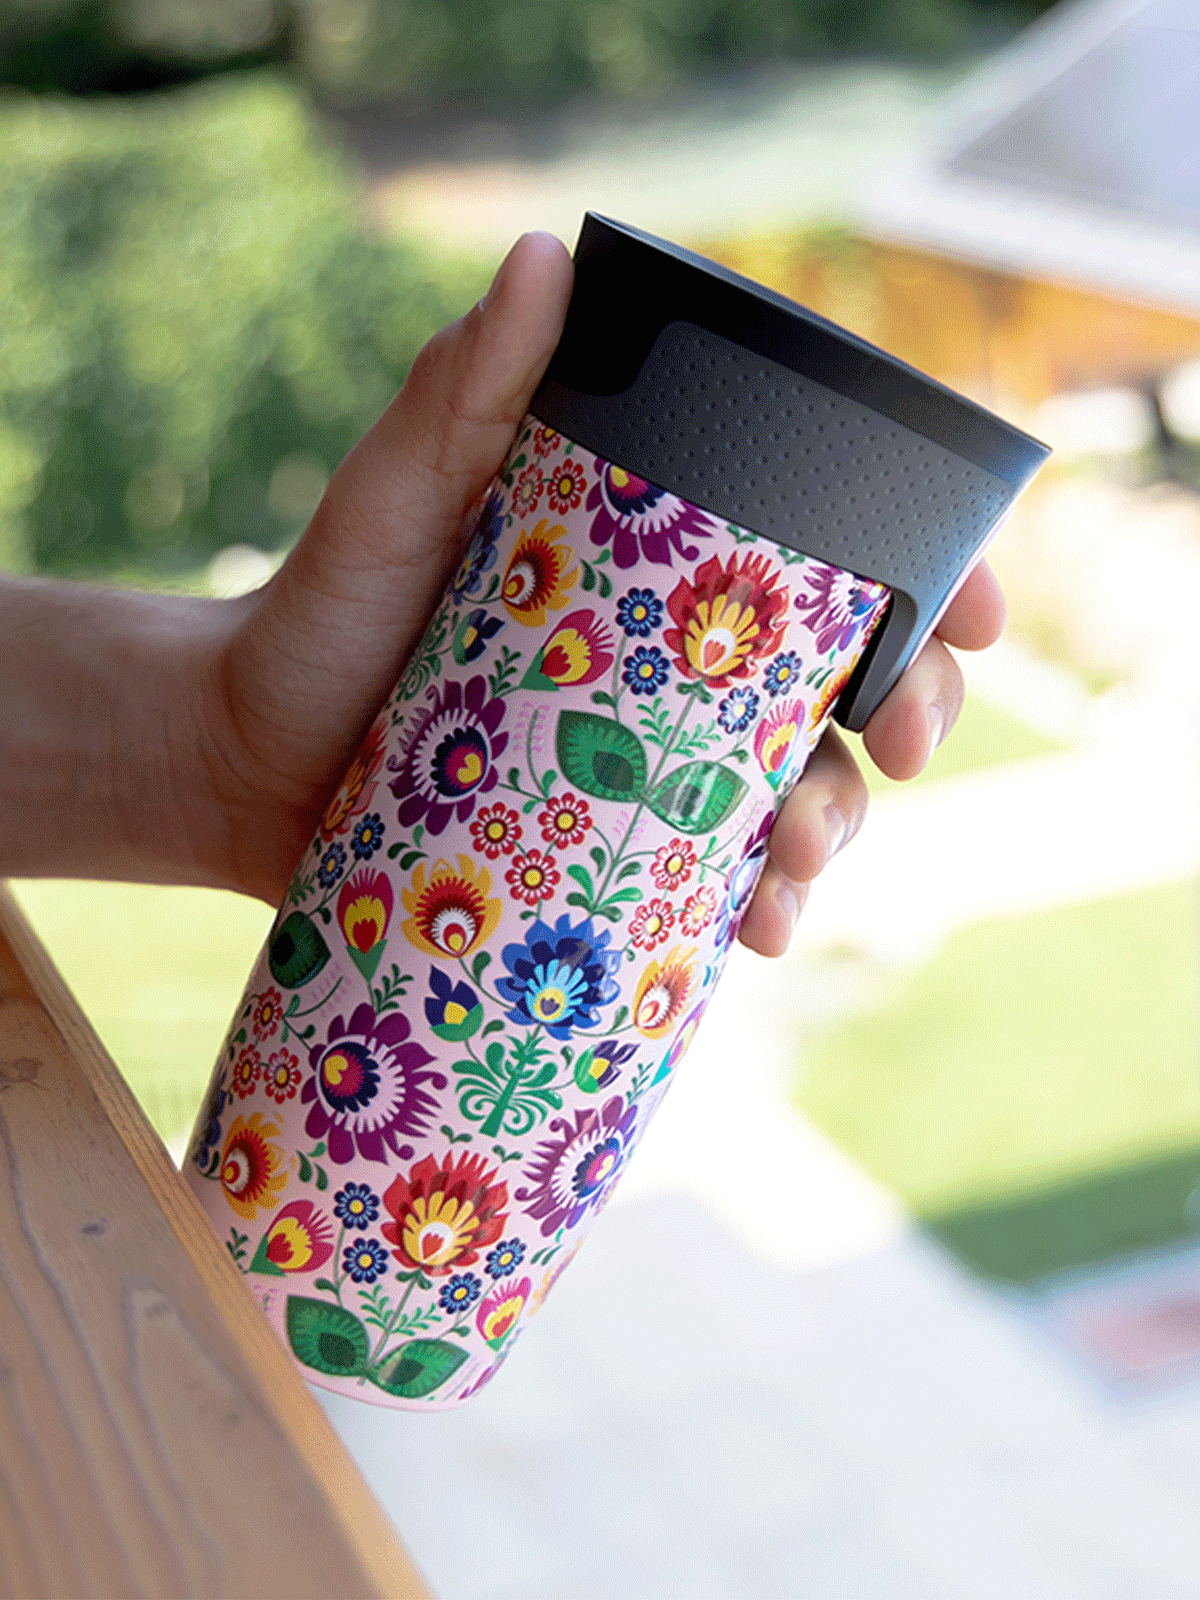 New Contigo West Loop Thermos Coffee Water Travel Mug Drink Flask